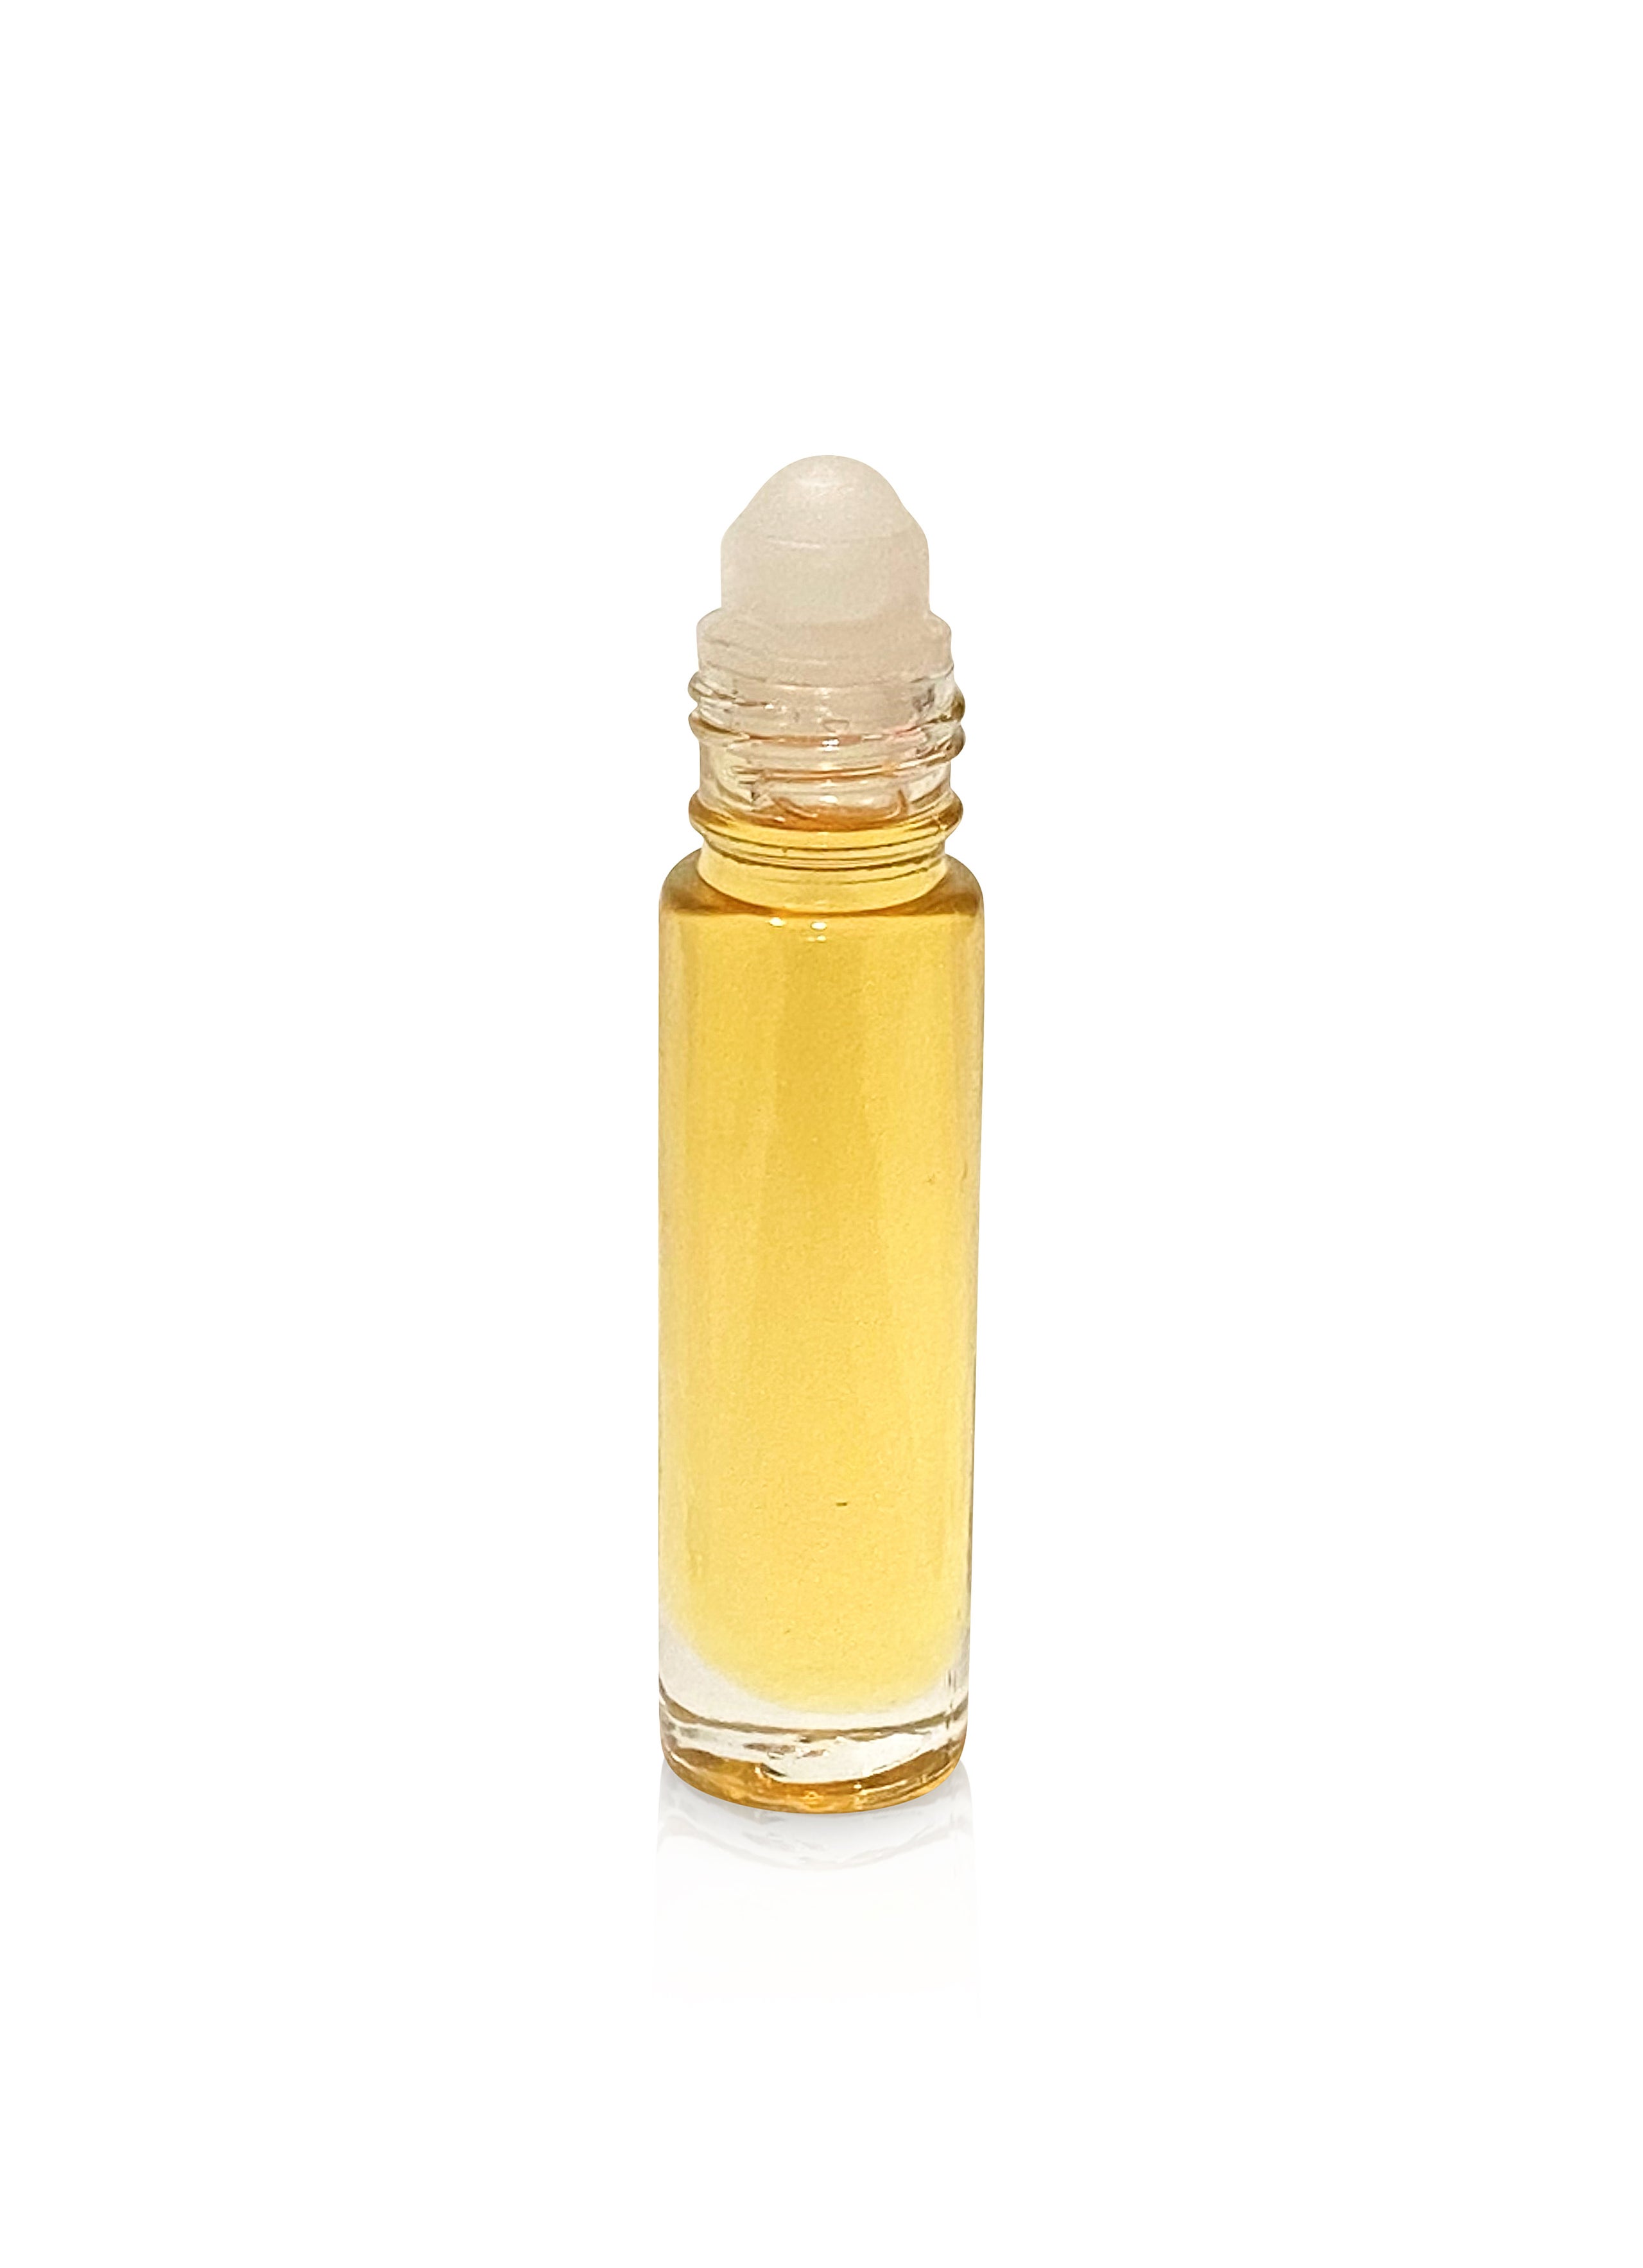 Pure Fragrance Oils, Body Oils